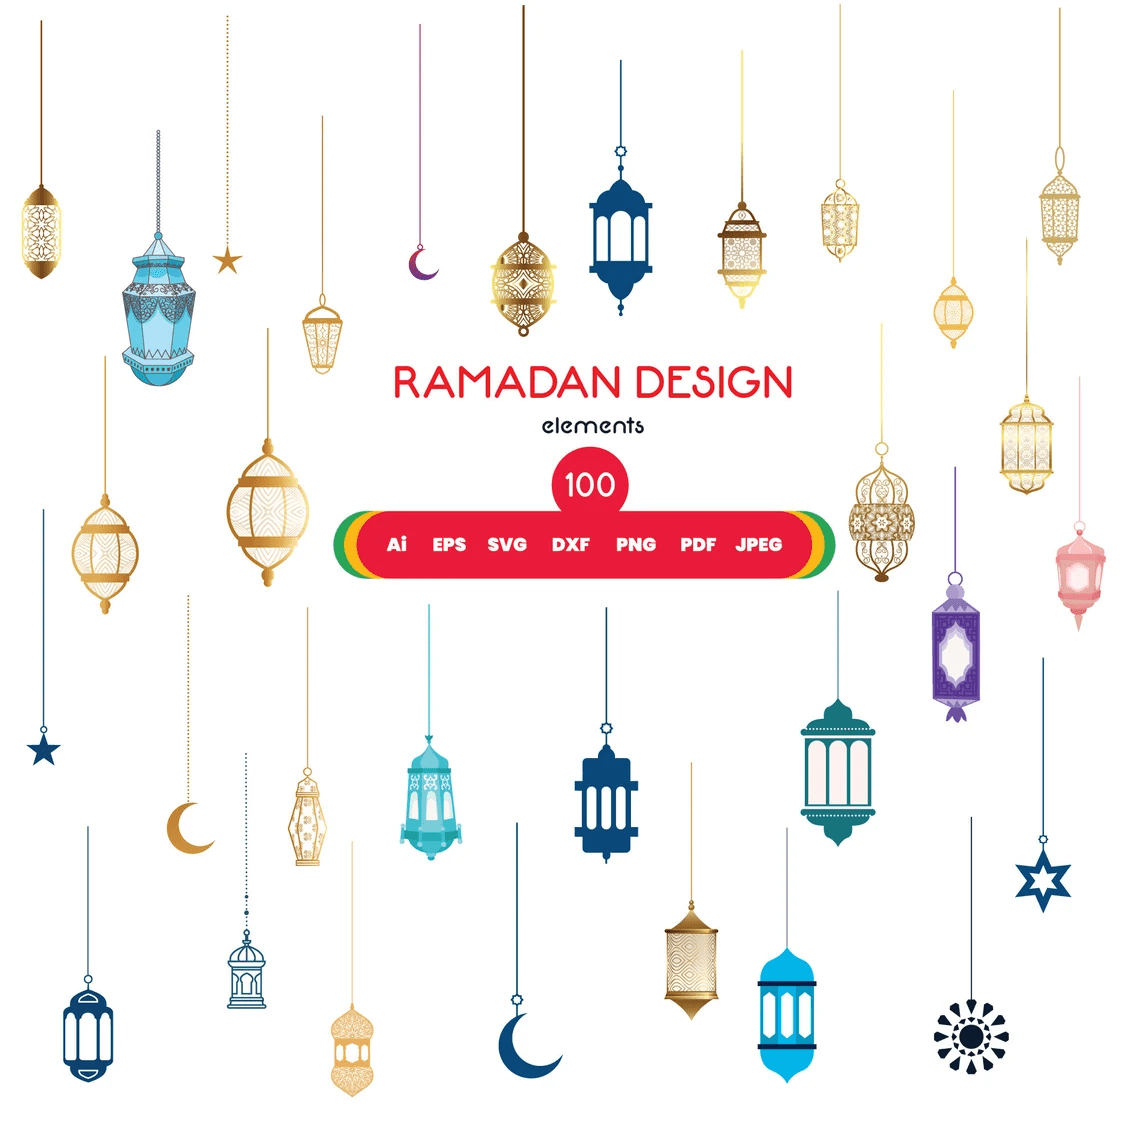 Ramadan as a way of life for everyone.